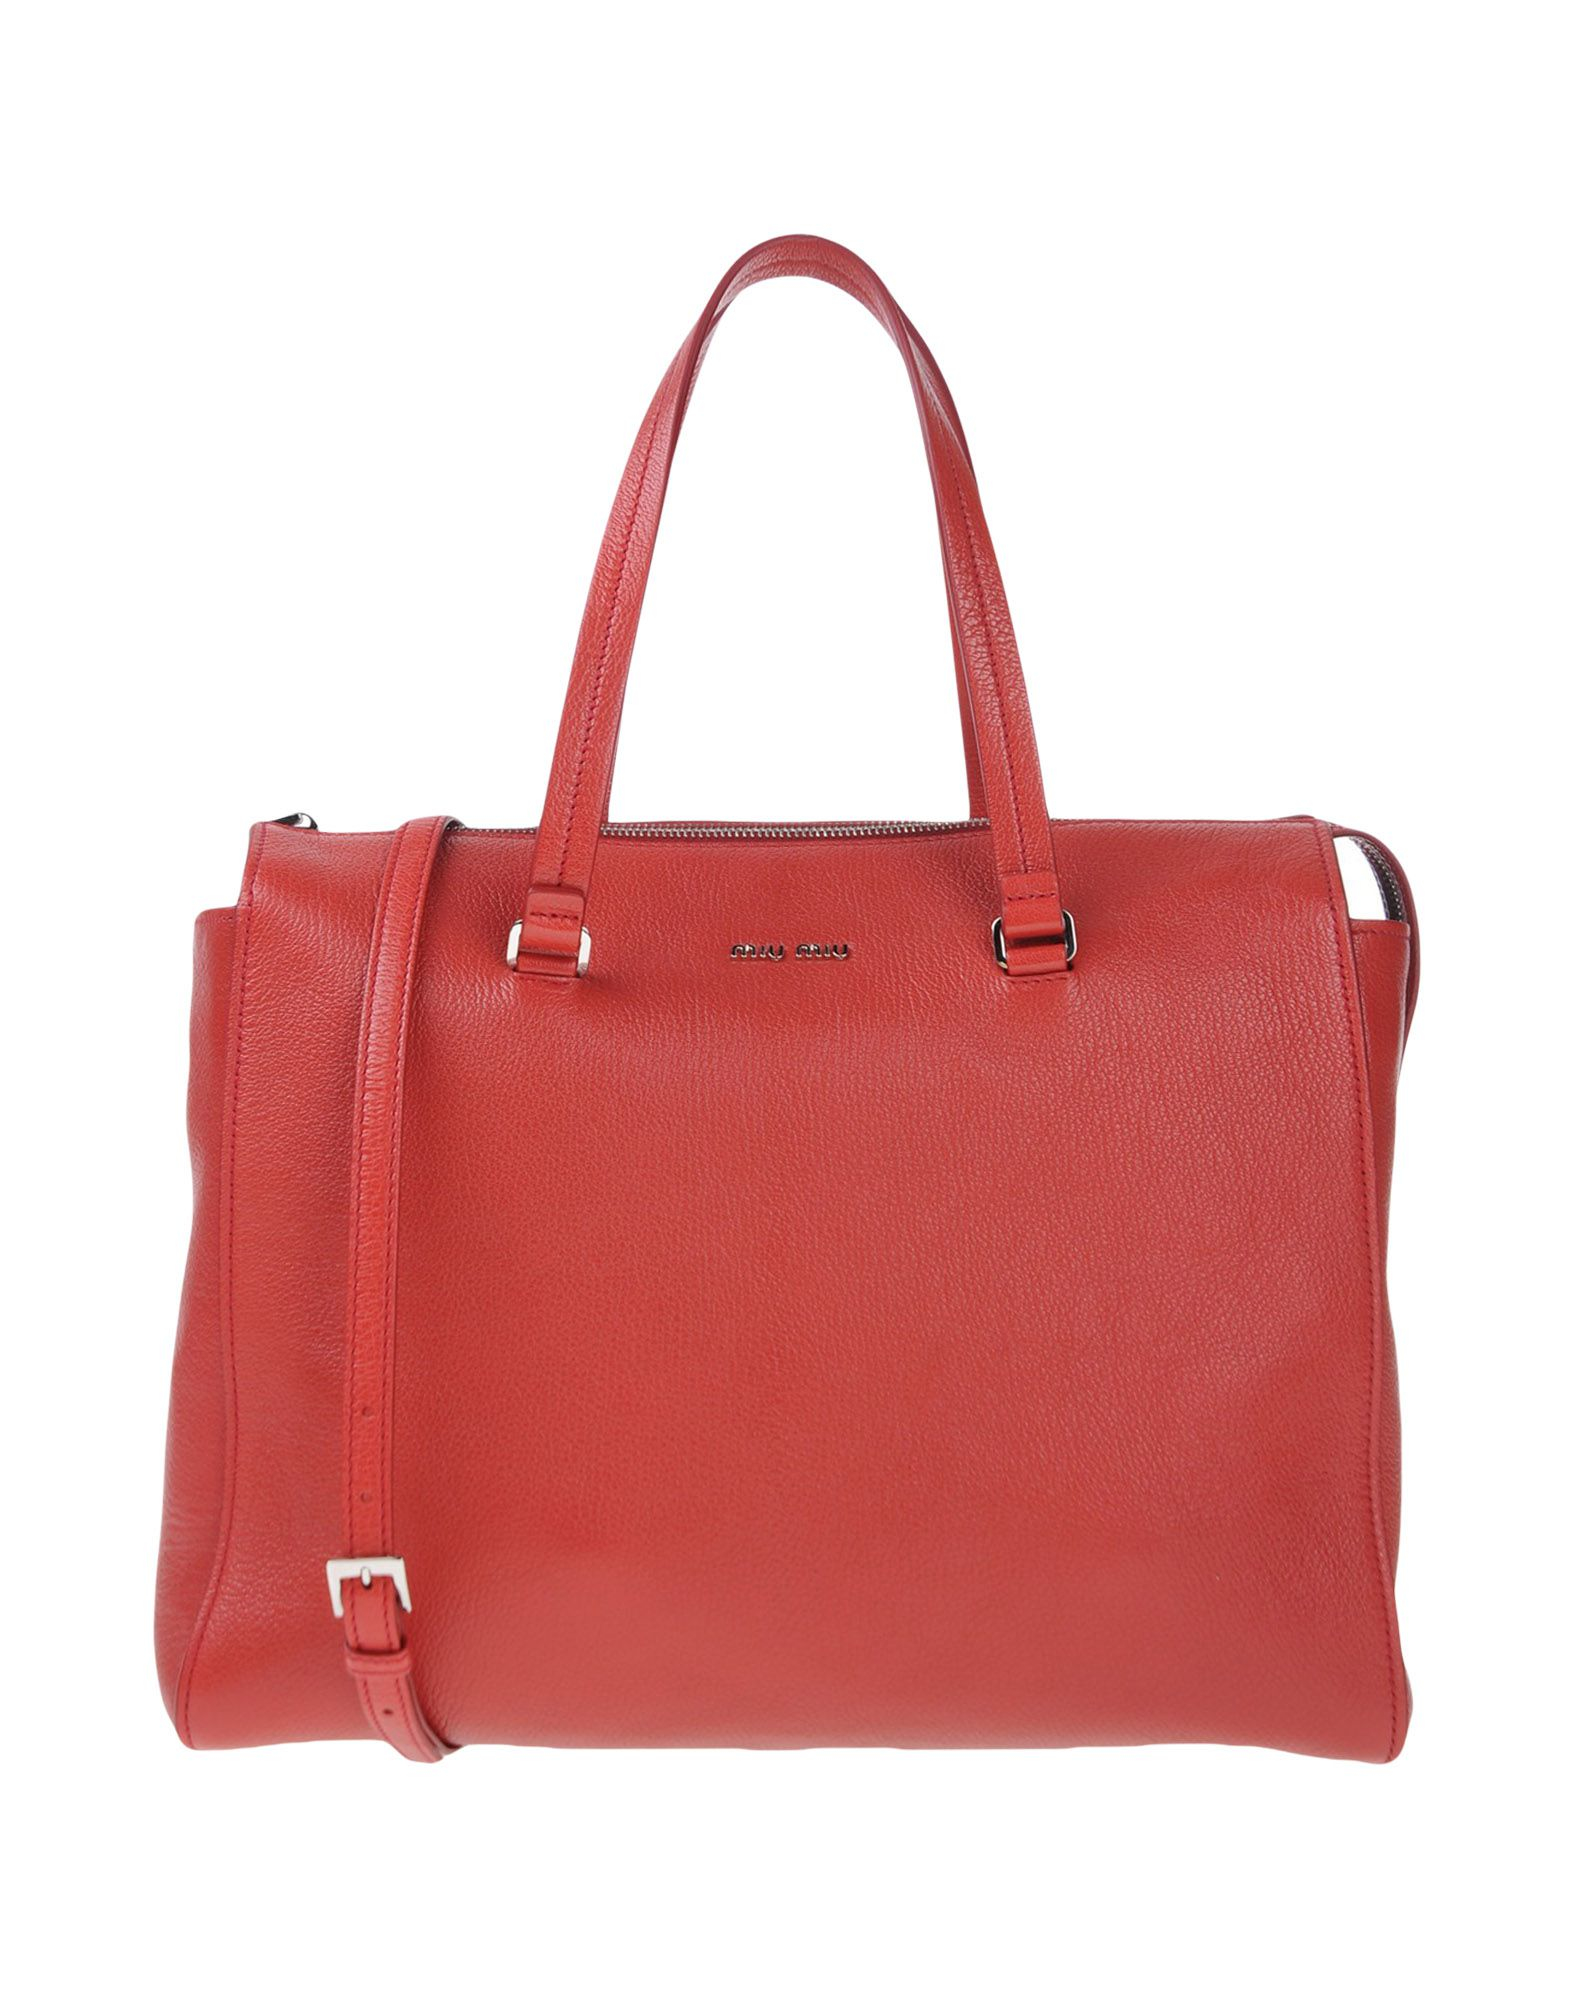 Miu miu Handbag in Red | Lyst